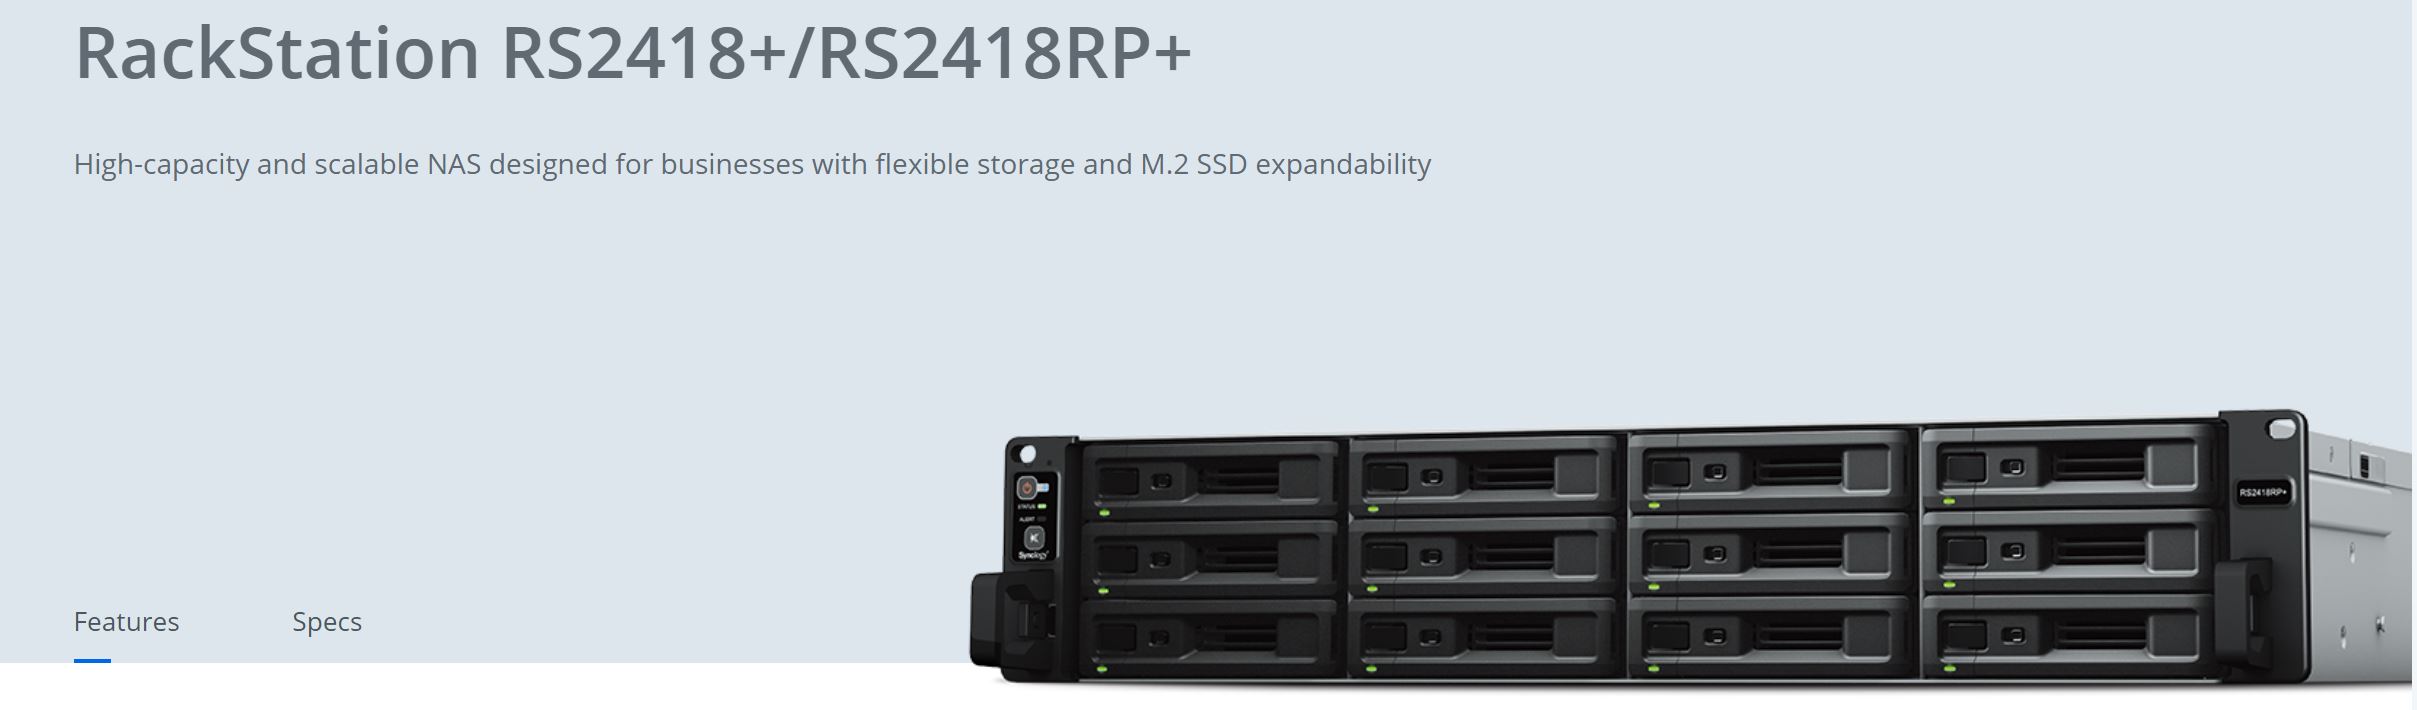 Synology RackStation RS2418+ 12-Bay 3.5' Diskless 4xGbE NAS (2U Rack) (SMB), Intel Atom 2.1GHz, 4GB RAM, 2xUSB3, Scalable - With SRS